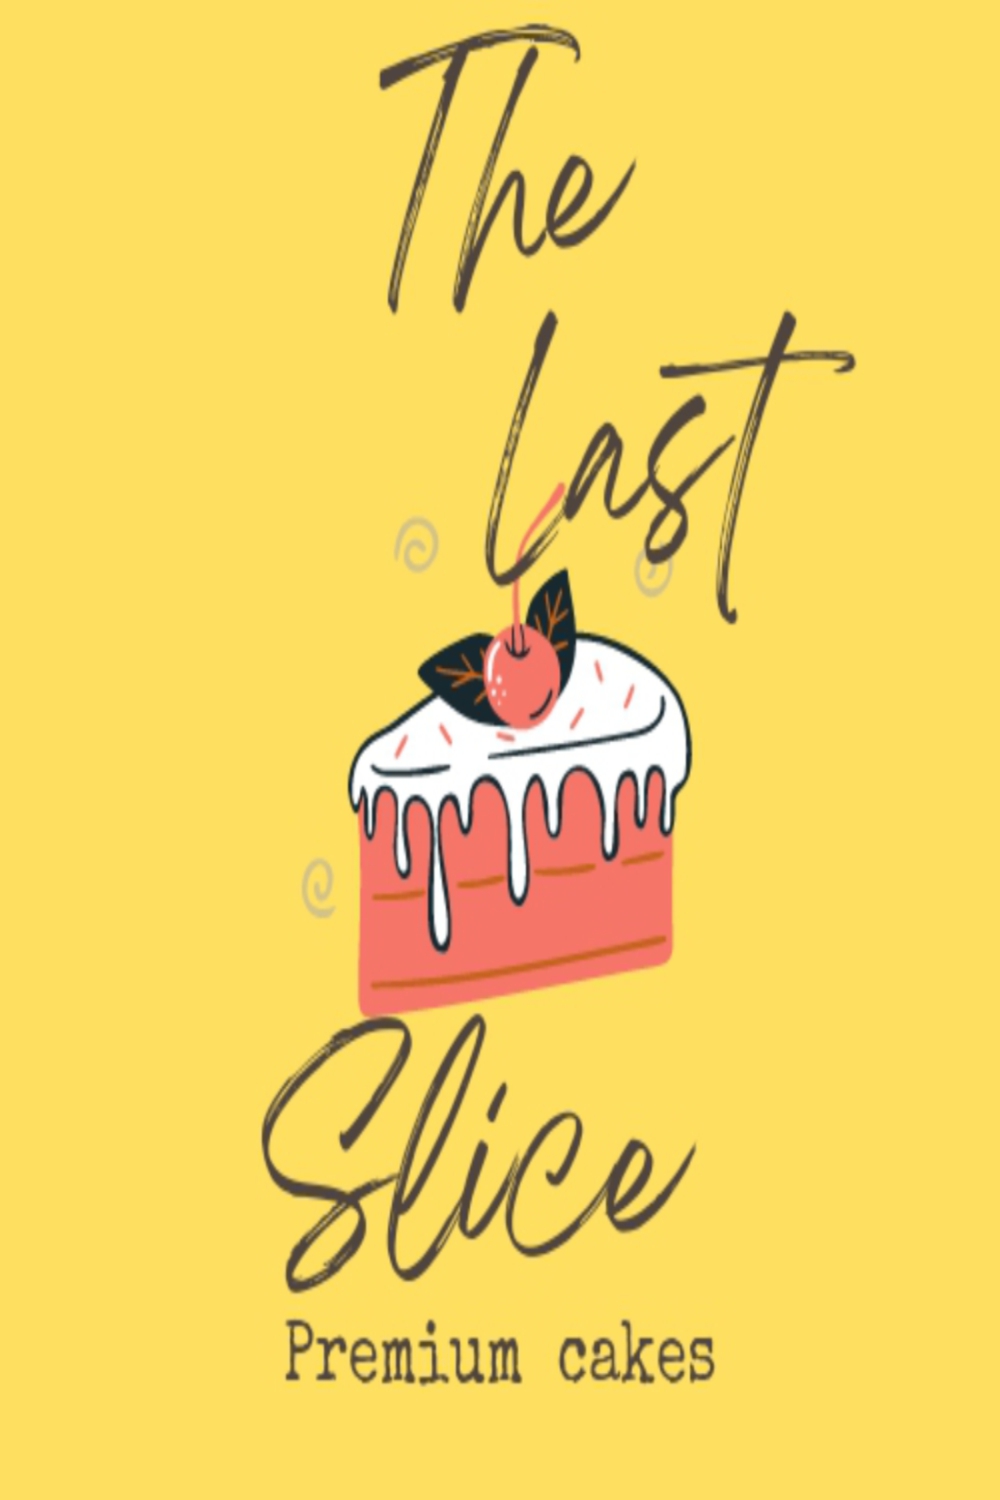 The Last Slice Premium Cakes Design pinterest preview image.